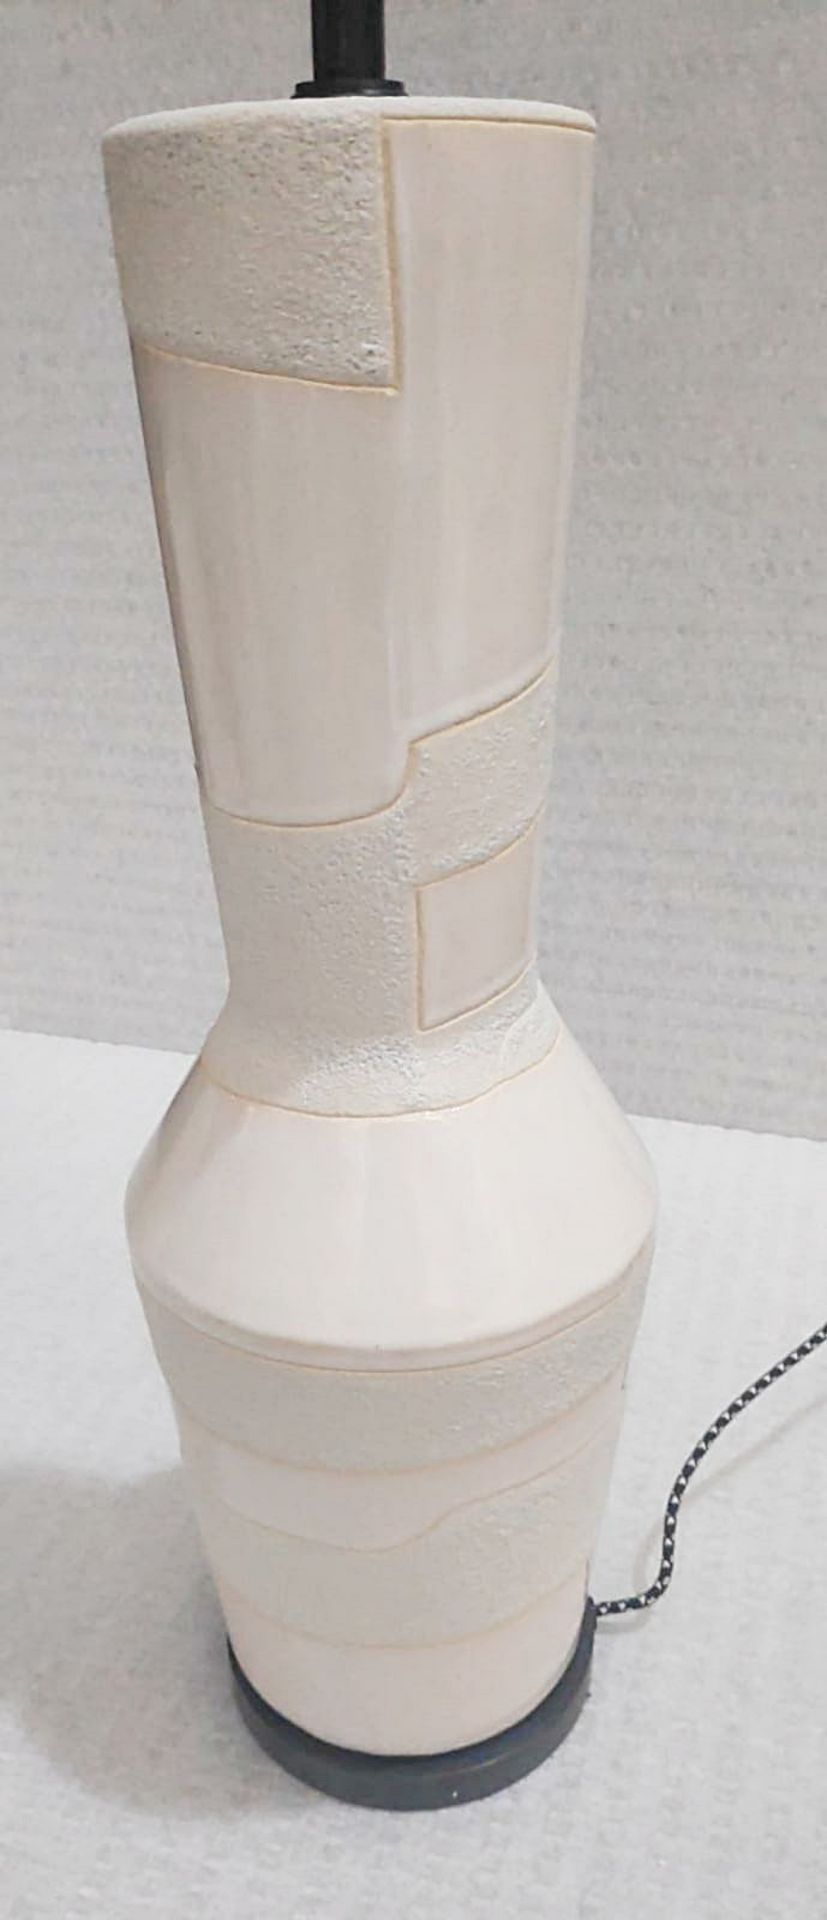 1 x KELLY WEARSTLER / VISUAL COMFORT 'Alta' Designer Table Lamp In White - Original Price £1,000 - Image 3 of 13